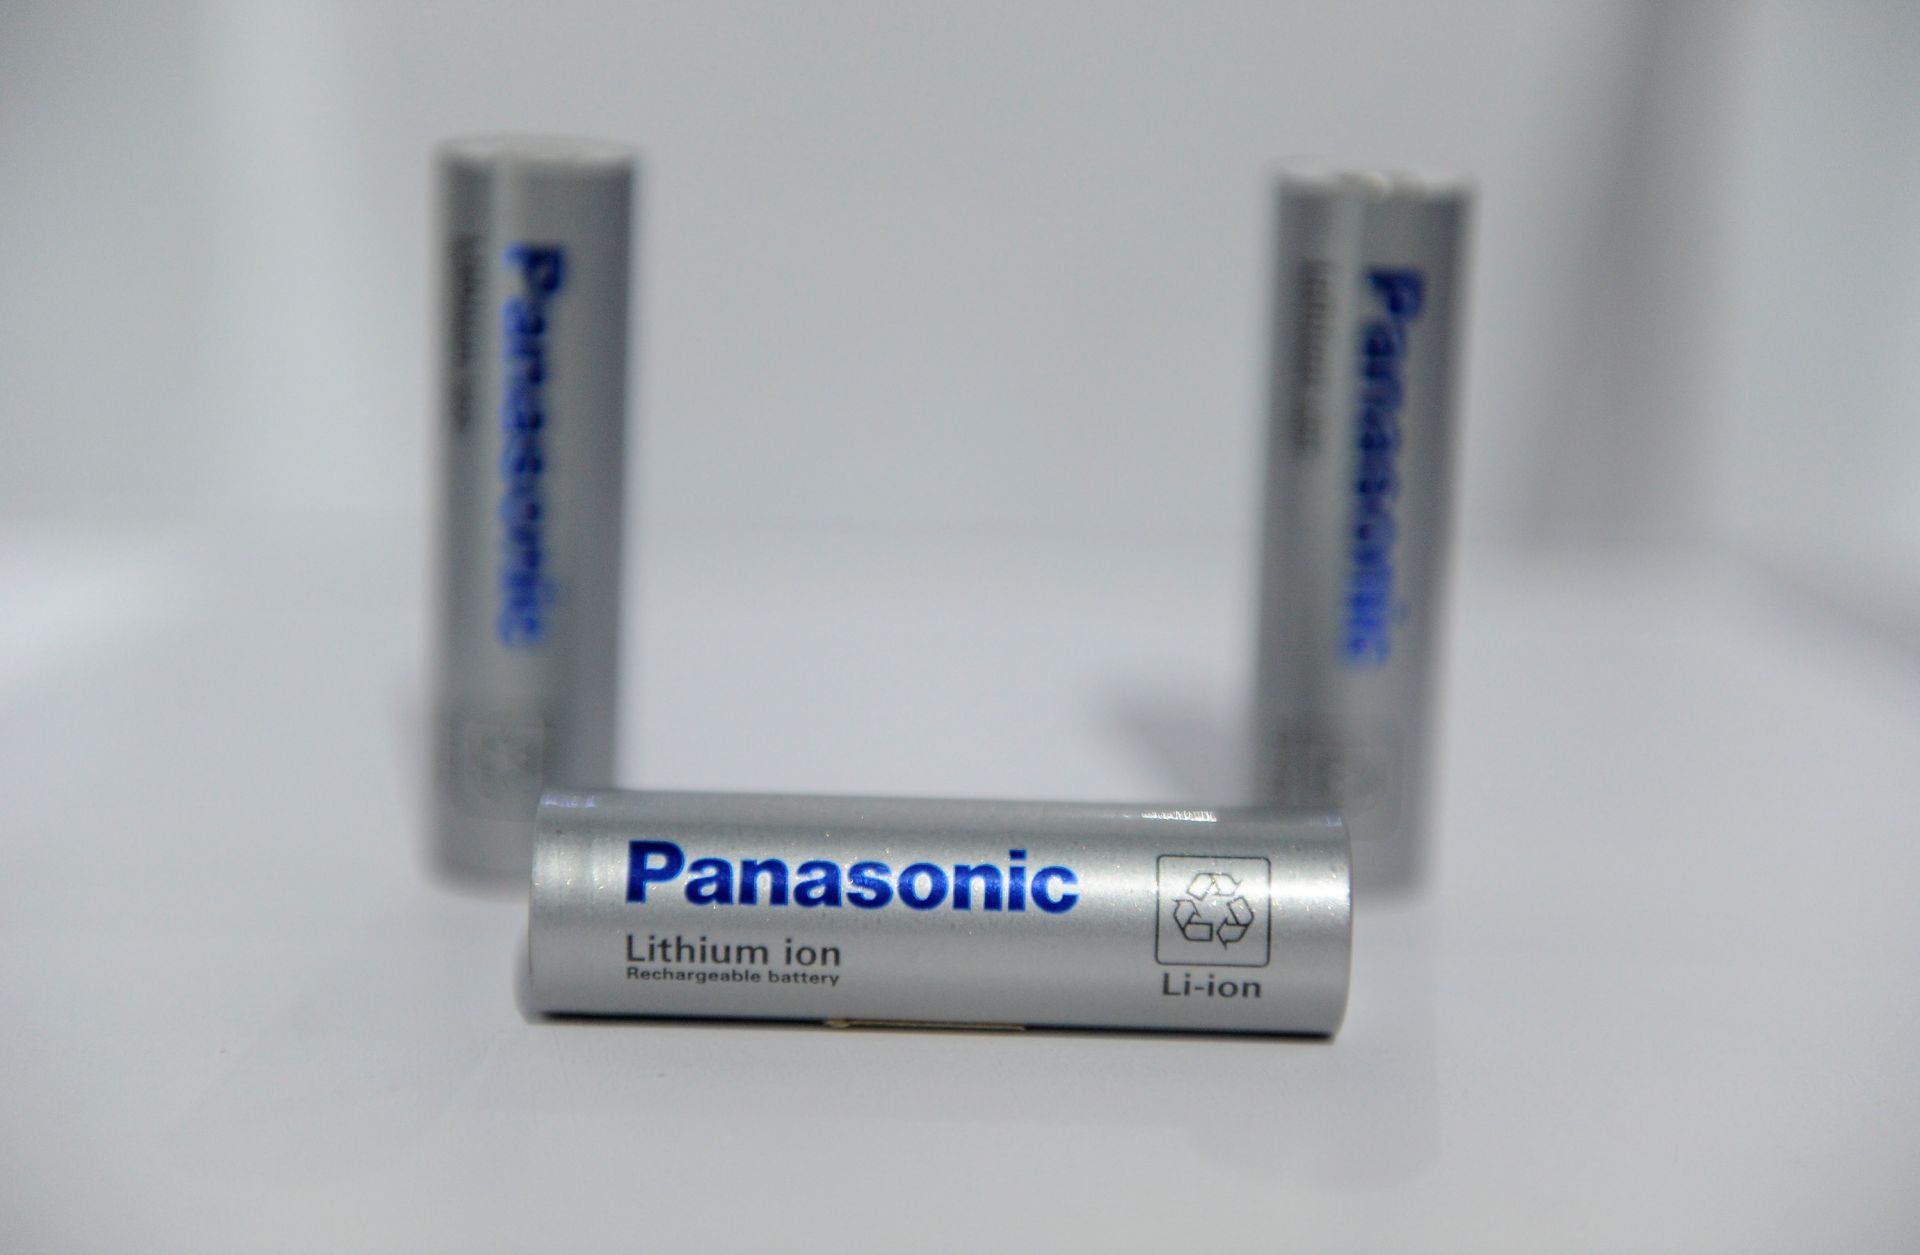 Panasonic's lithium ion batteries are on display.